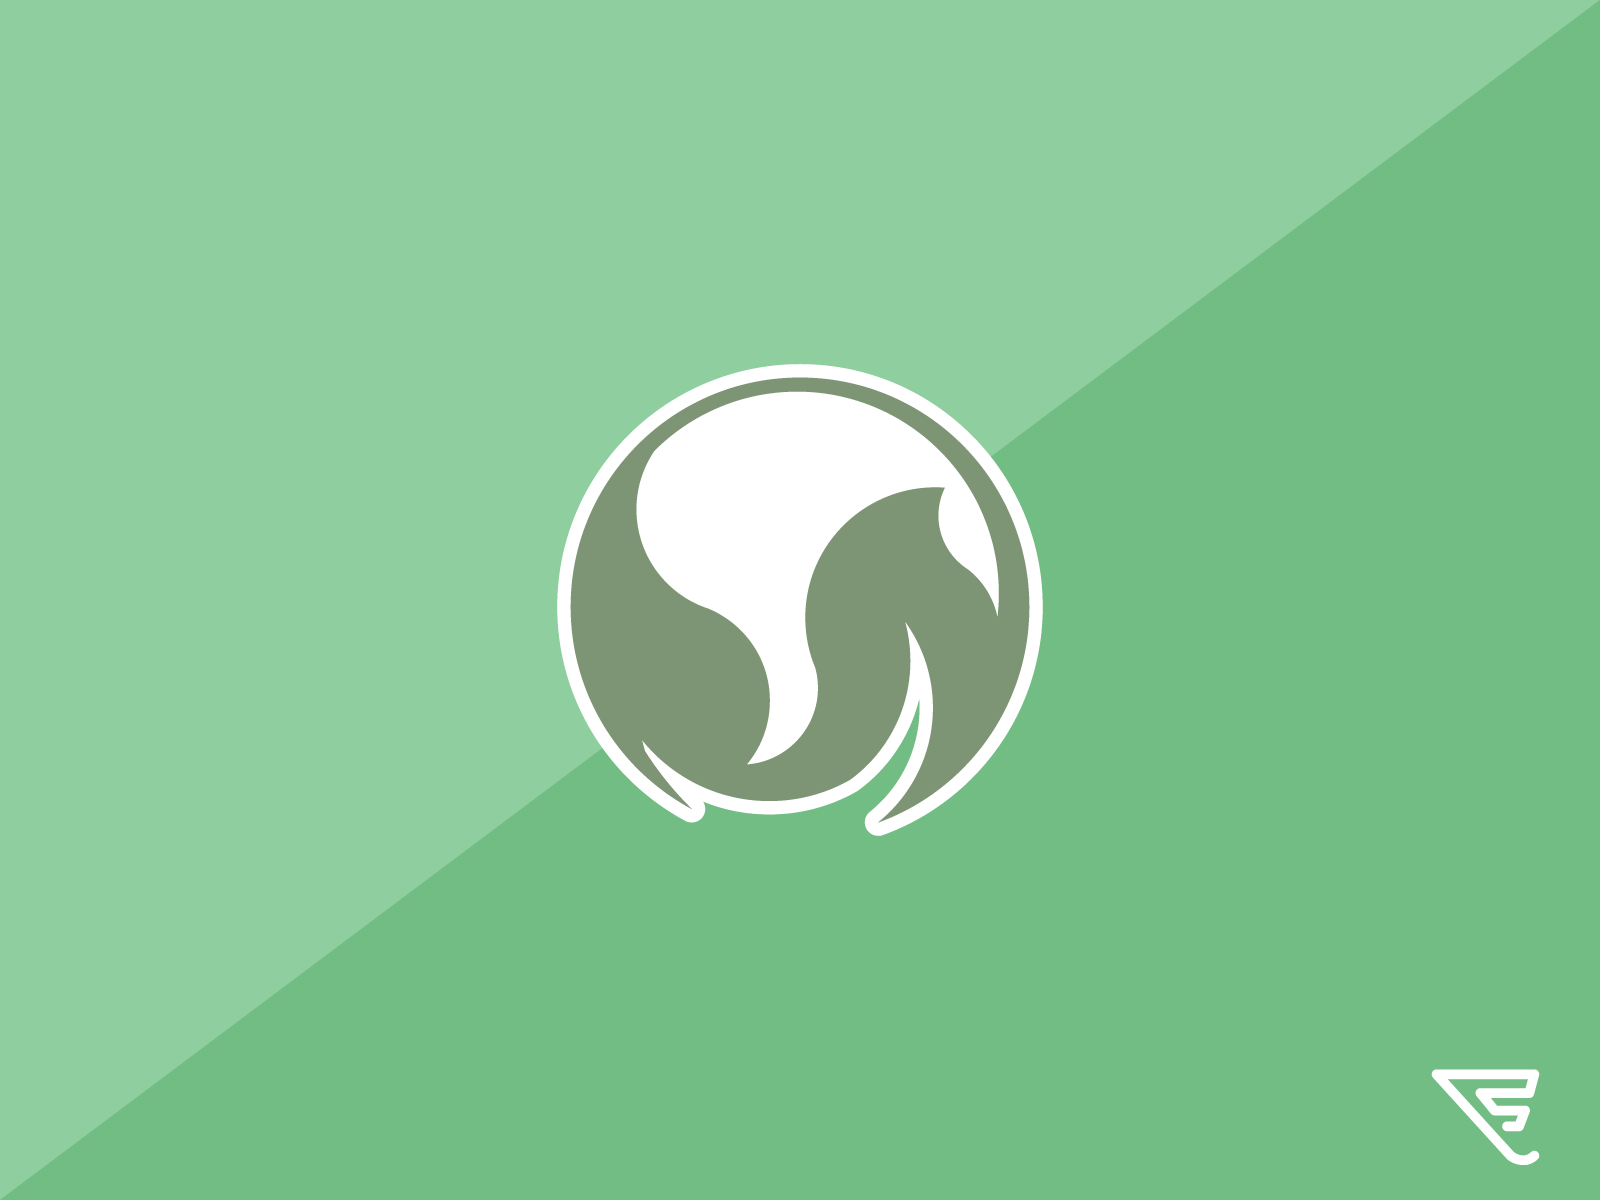 KEMENBATA LOGO design illustration leaf logo vector